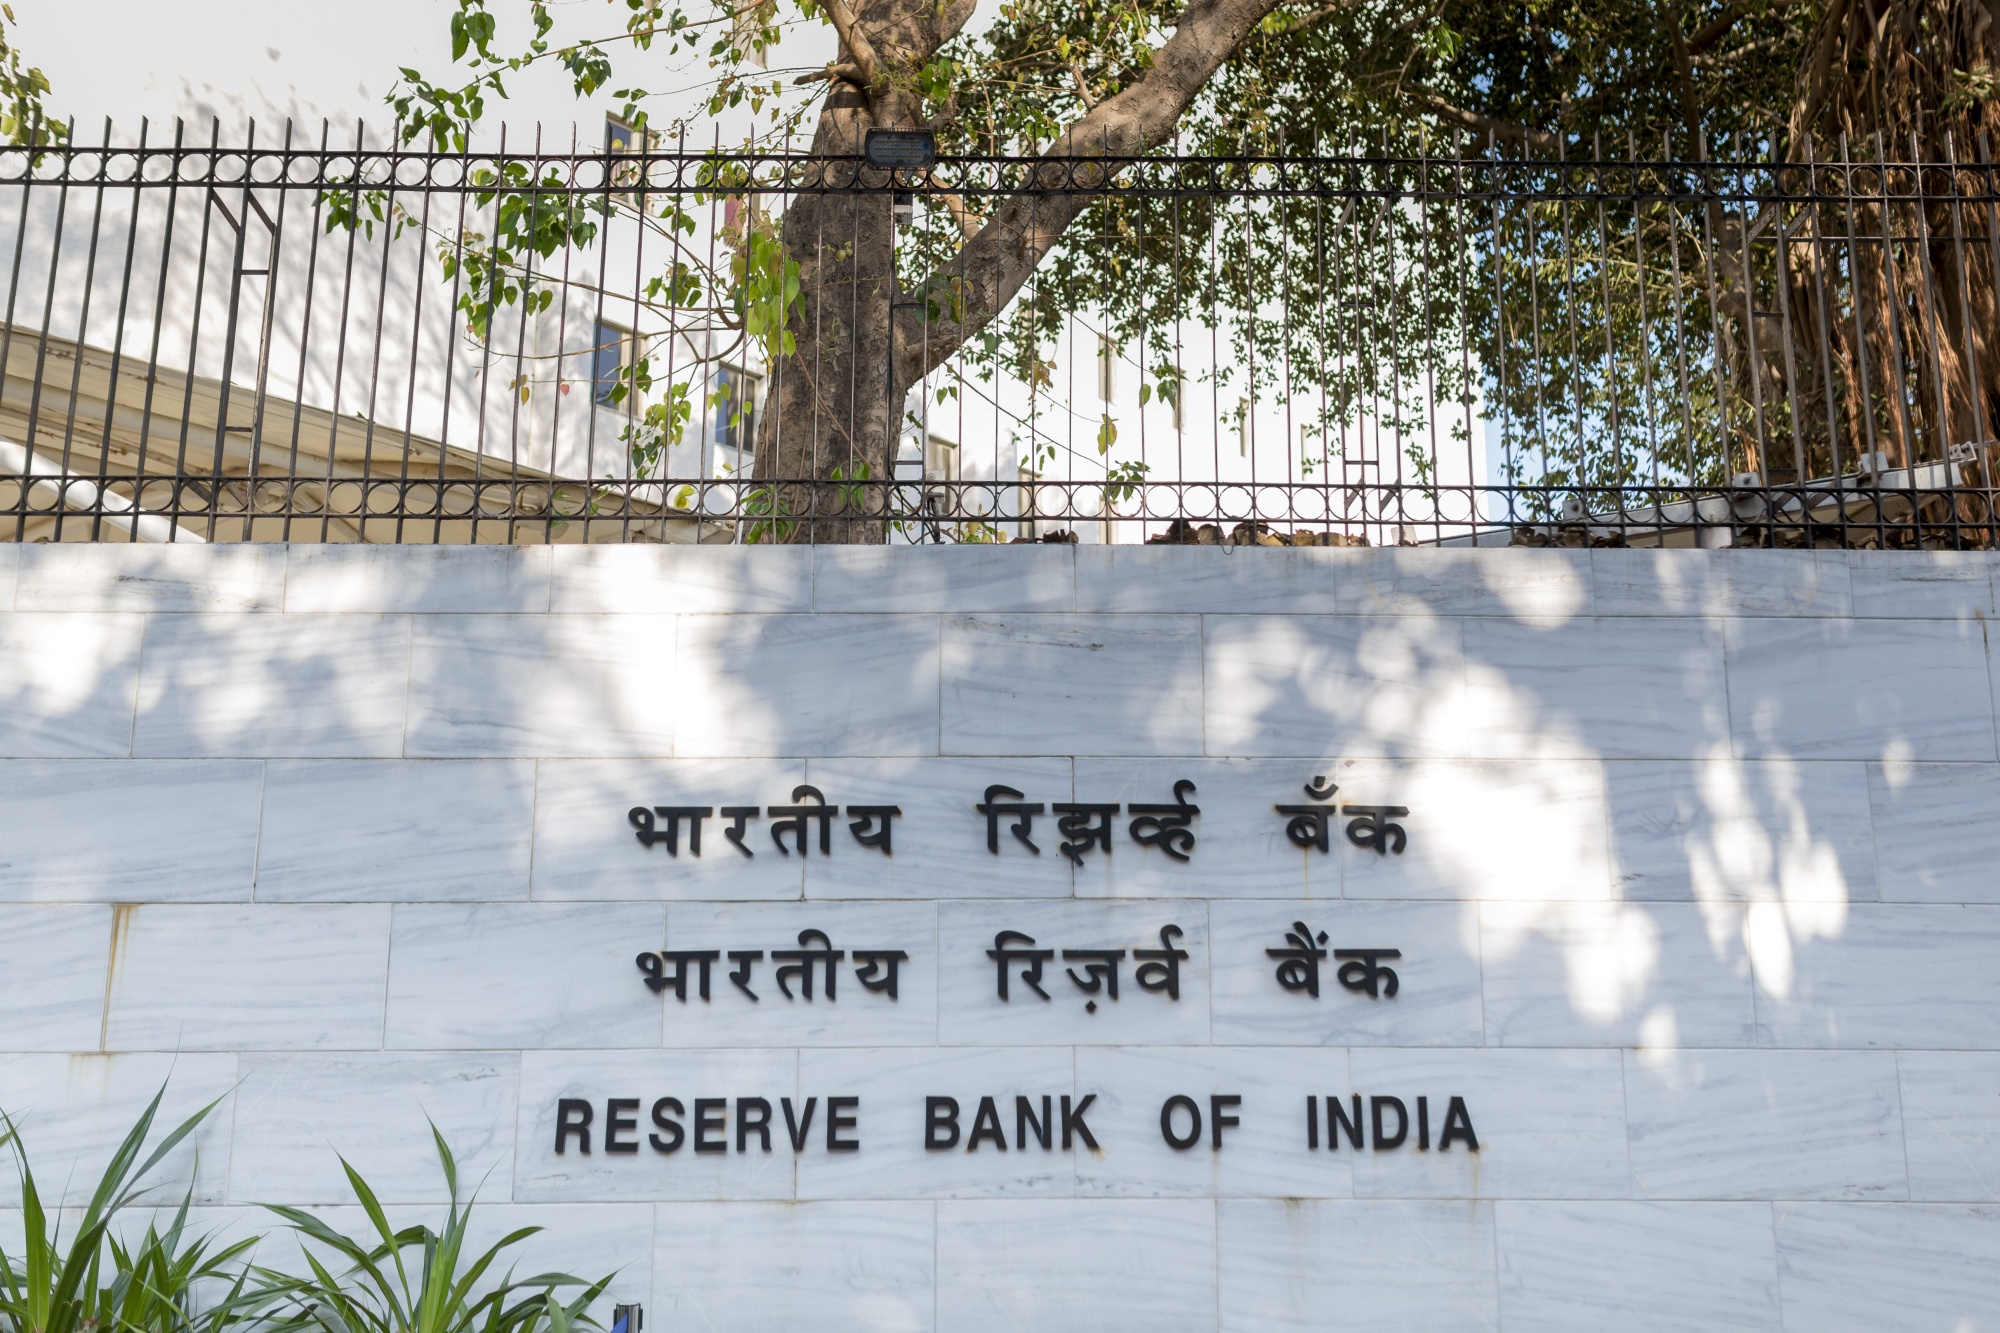 The Reserve Bank of India (RBI) building&nbsp;in Mumbai, India.